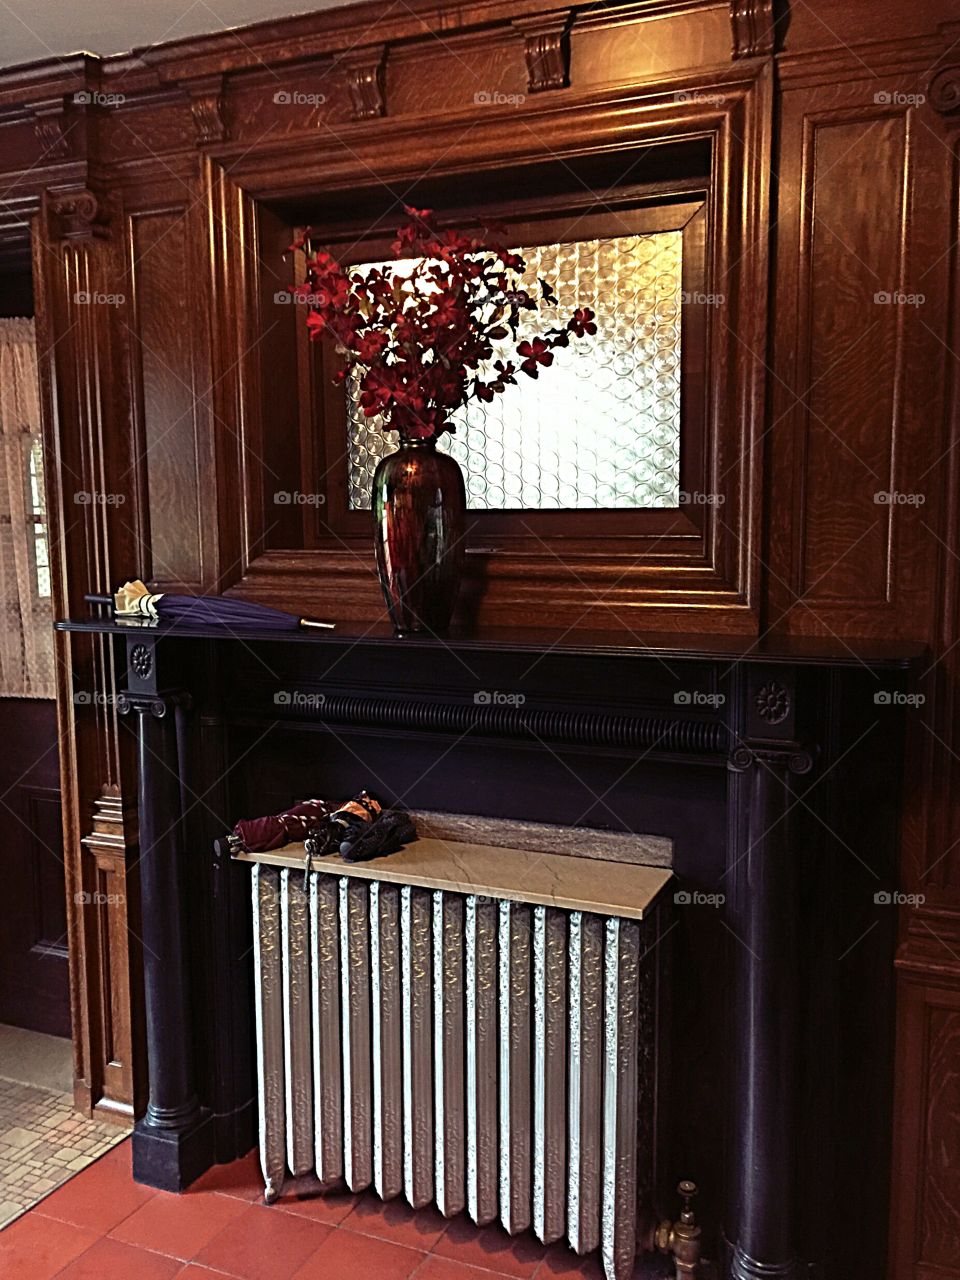 View of steel radiator and vase indoors